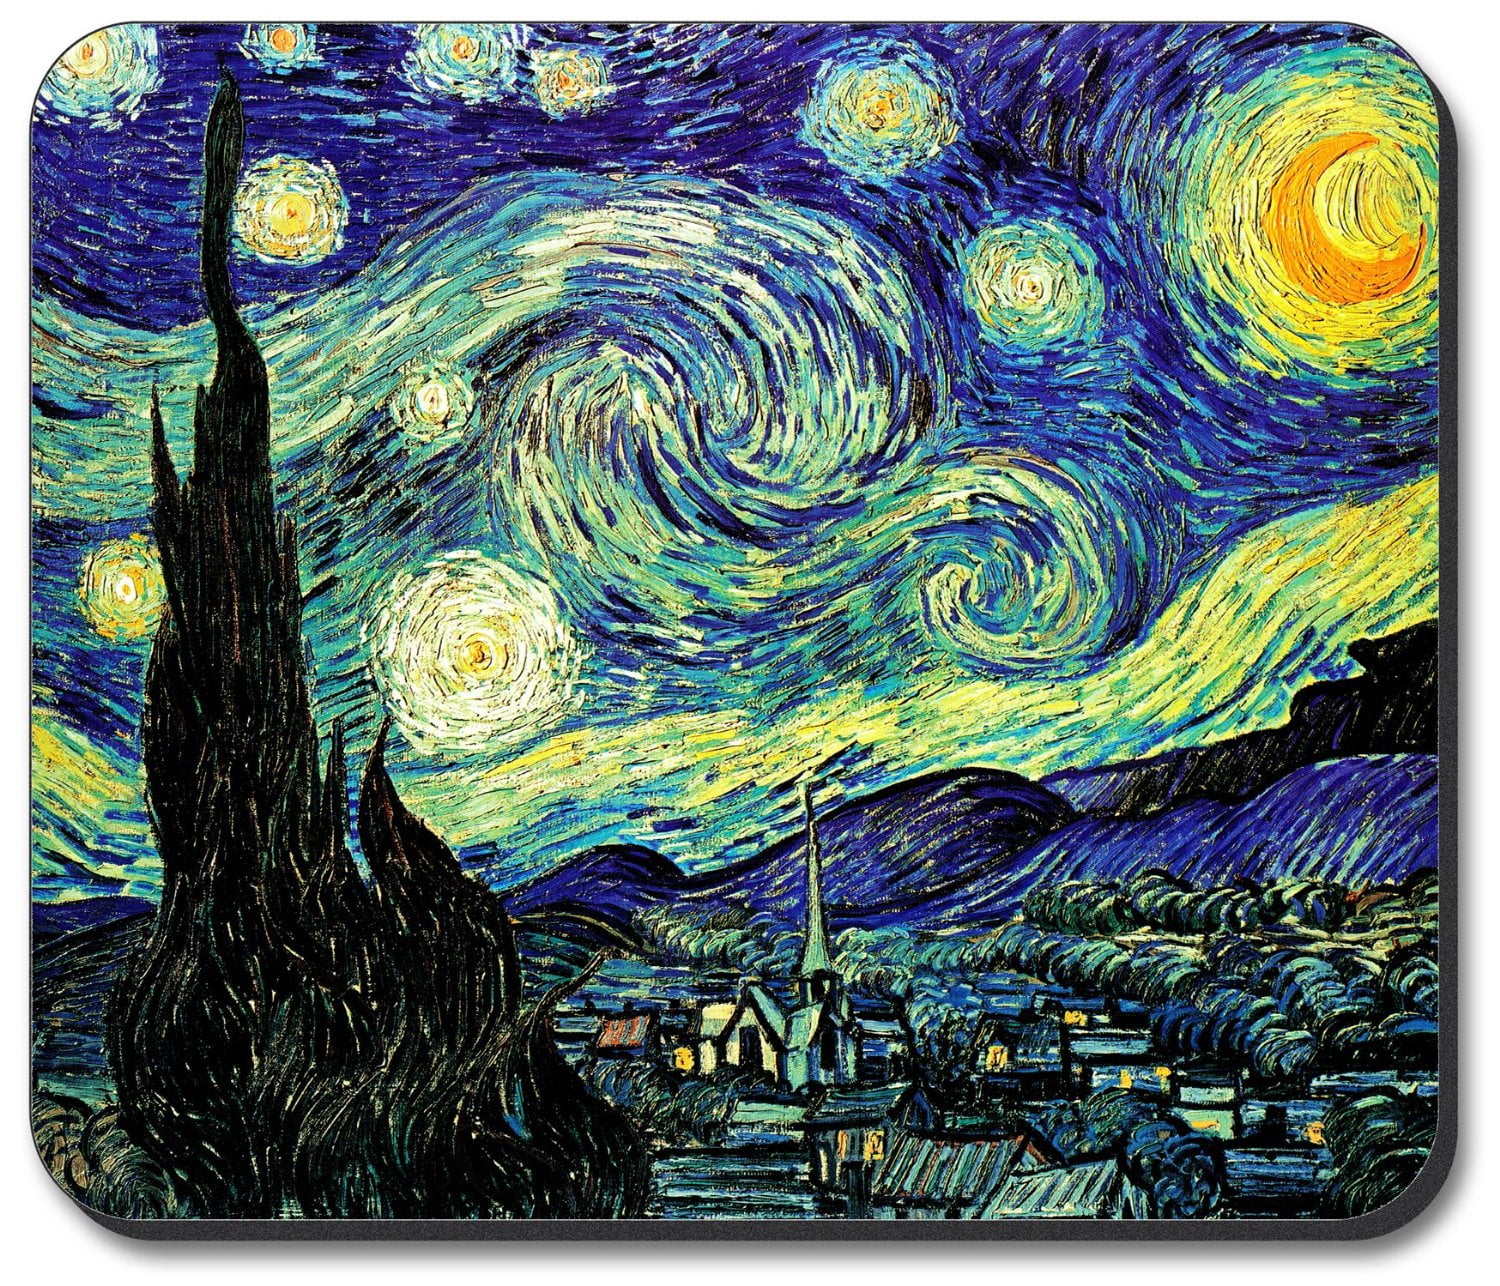 Art Plates Mouse Pad - Van Gogh: Starry Night